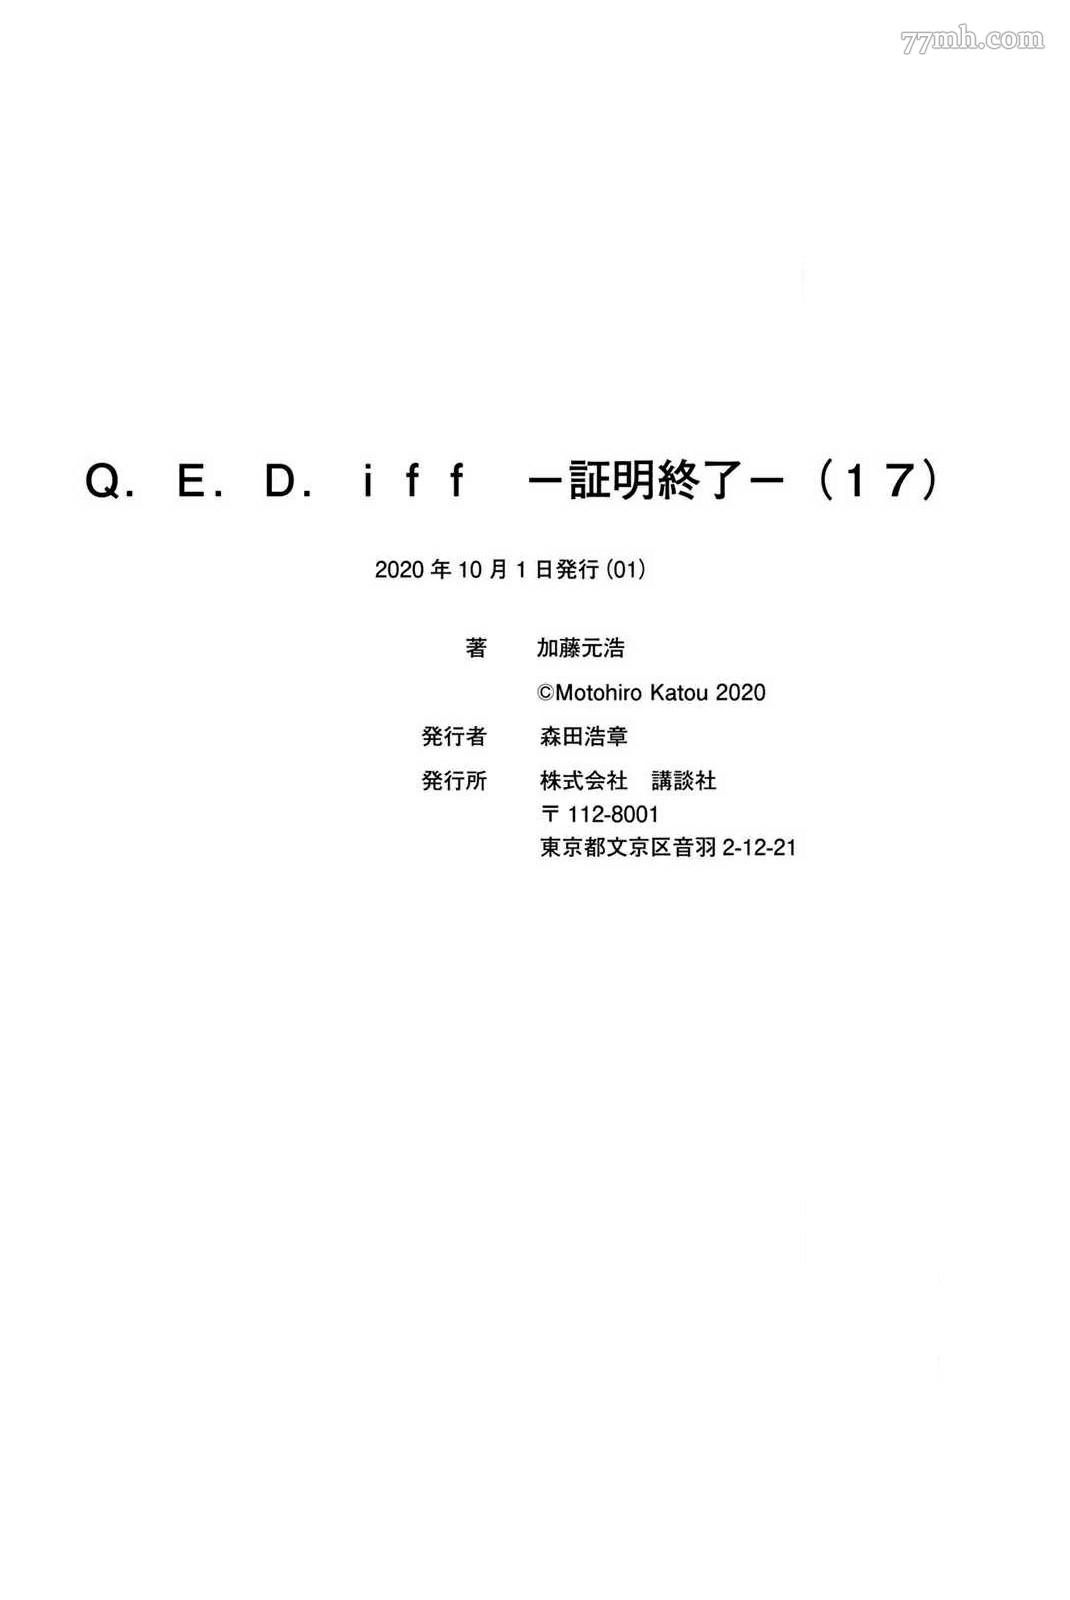 《Q.E.D. iff-证明终了-》漫画 iff-证明终了- 第34话